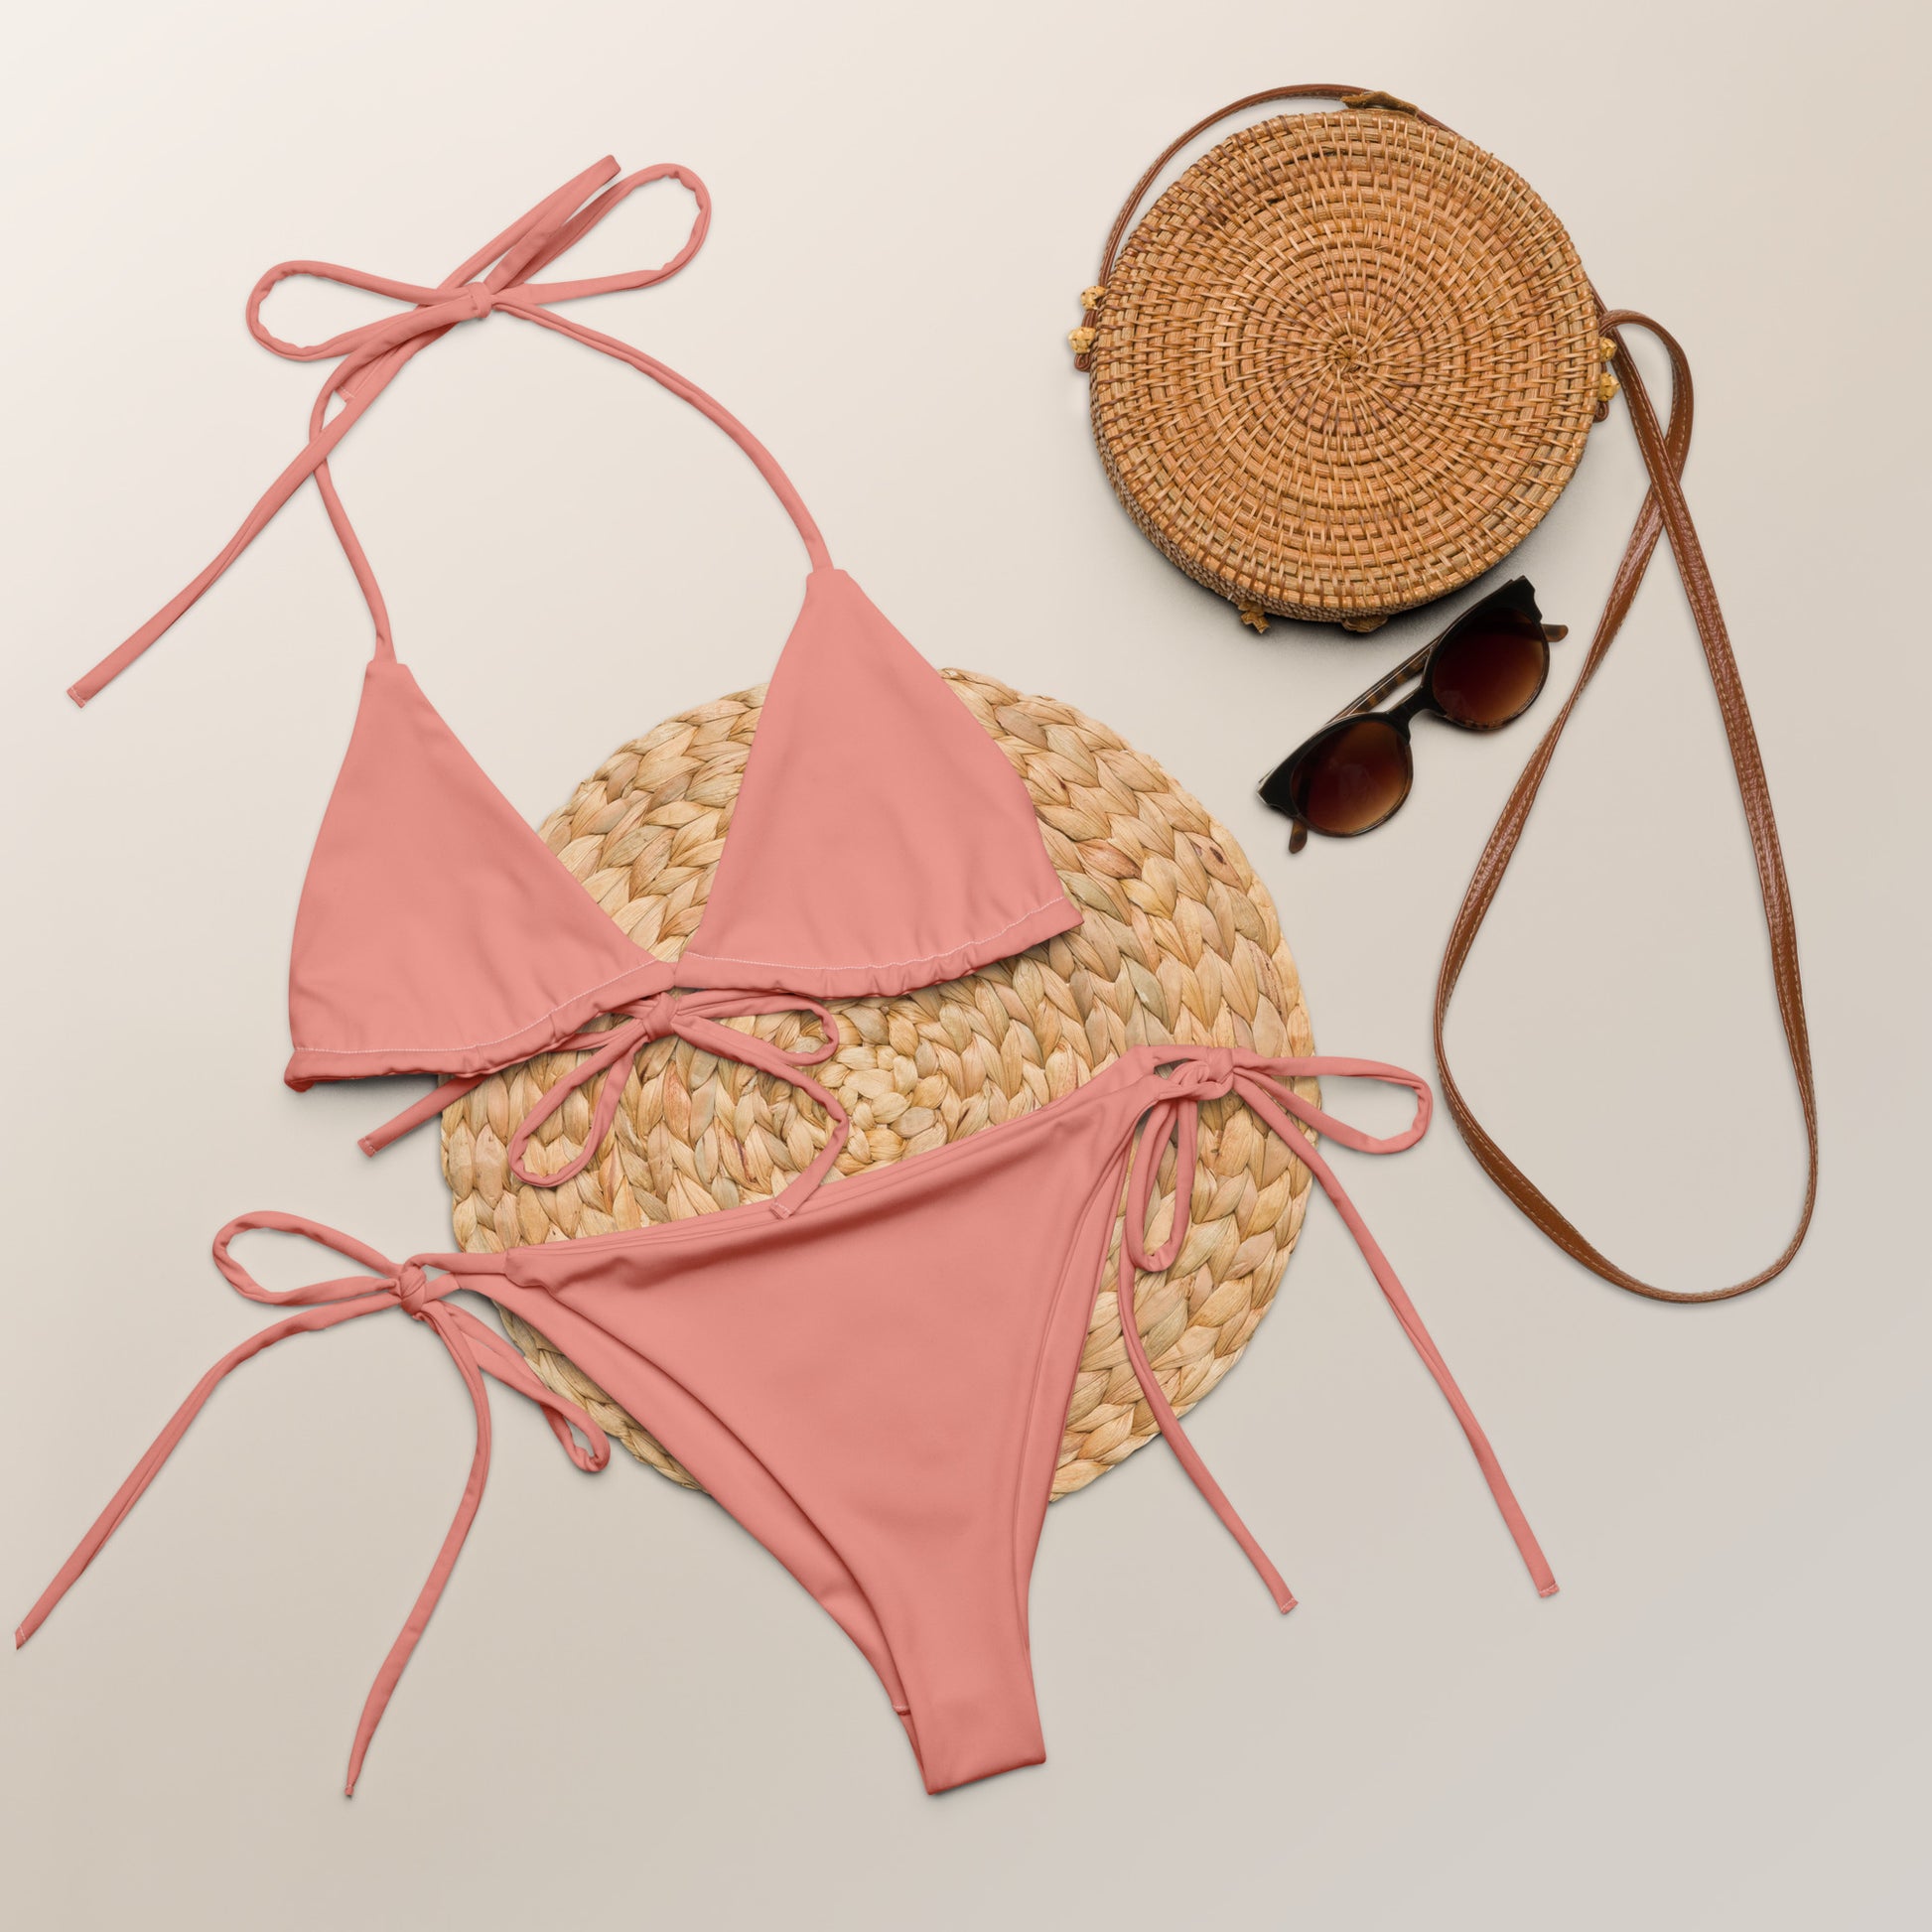 Humble Sportswear, women's Color Match pink plus size string bikini